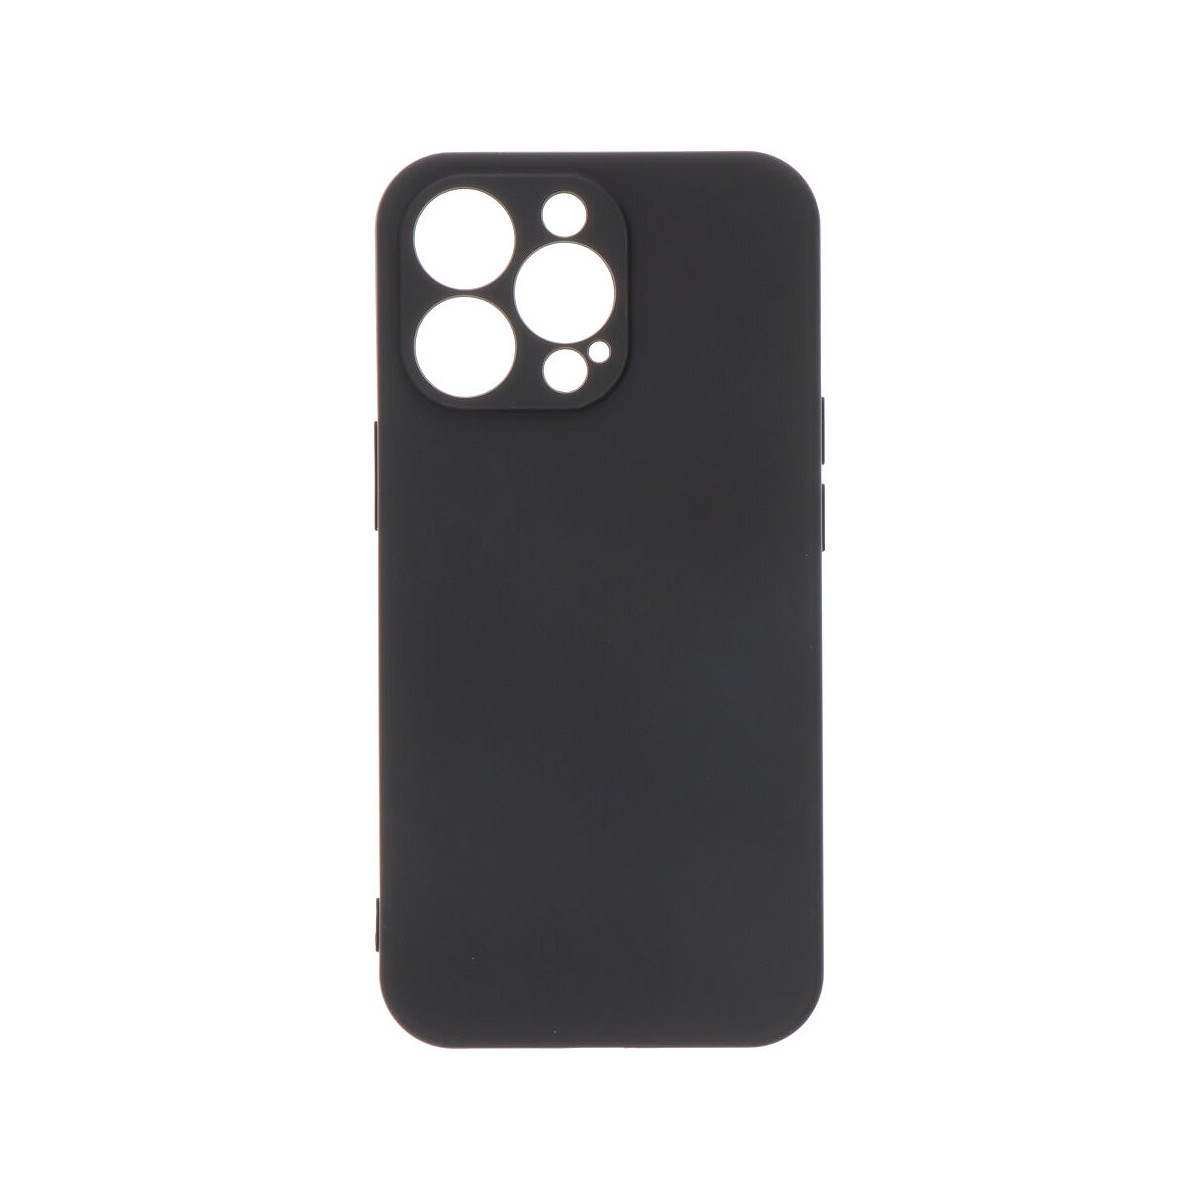 Carcasa negra de plástico soft touch para iphone 13 pro